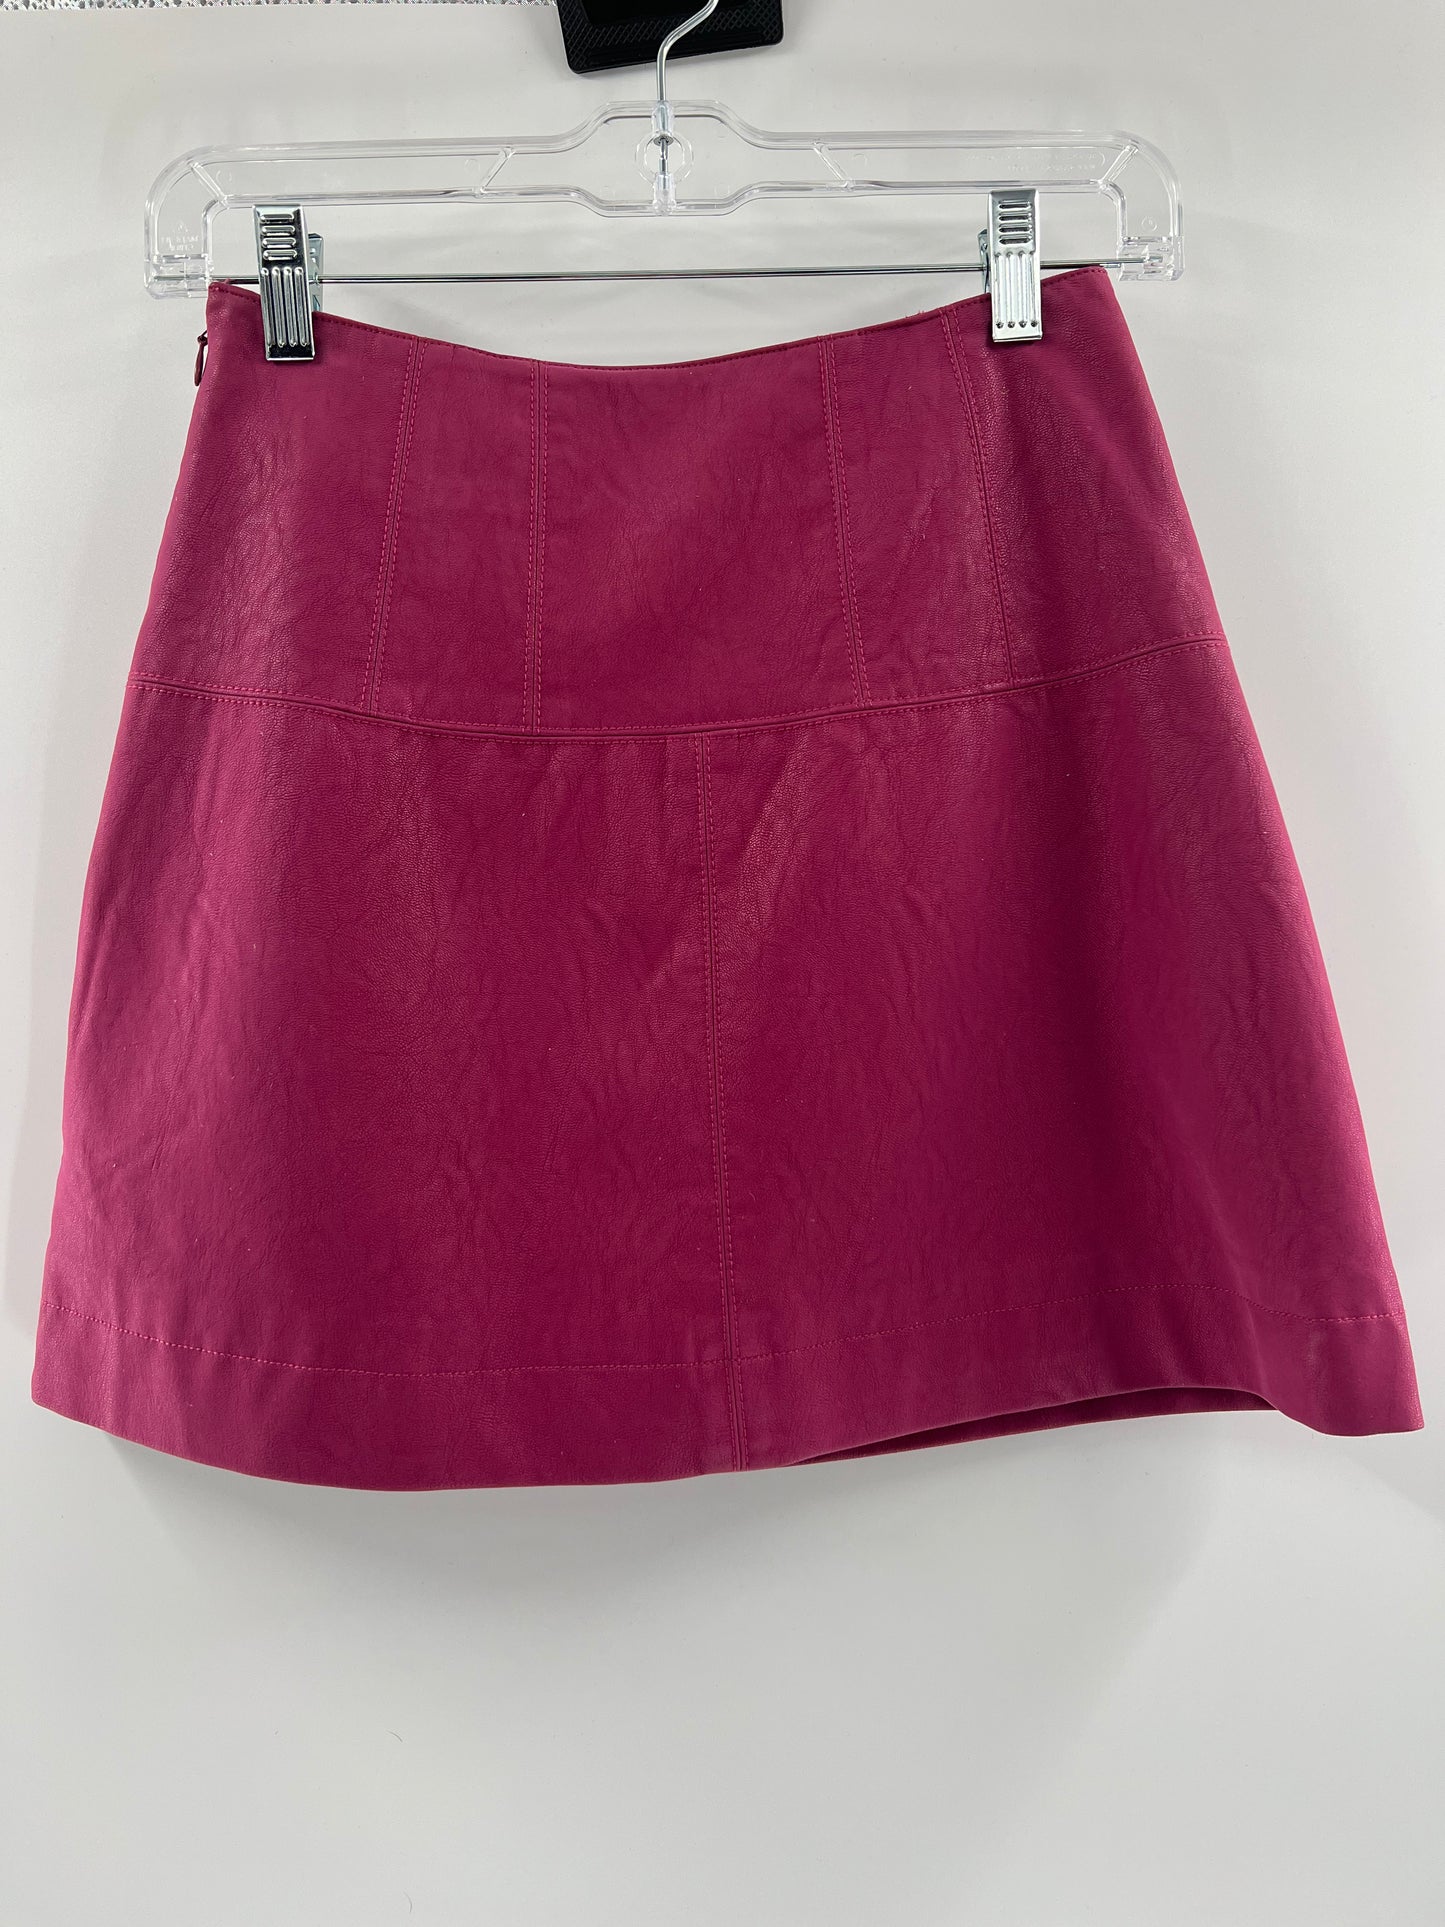 Free People - Vegan Leather Pink Mini Skirt (Size 0)